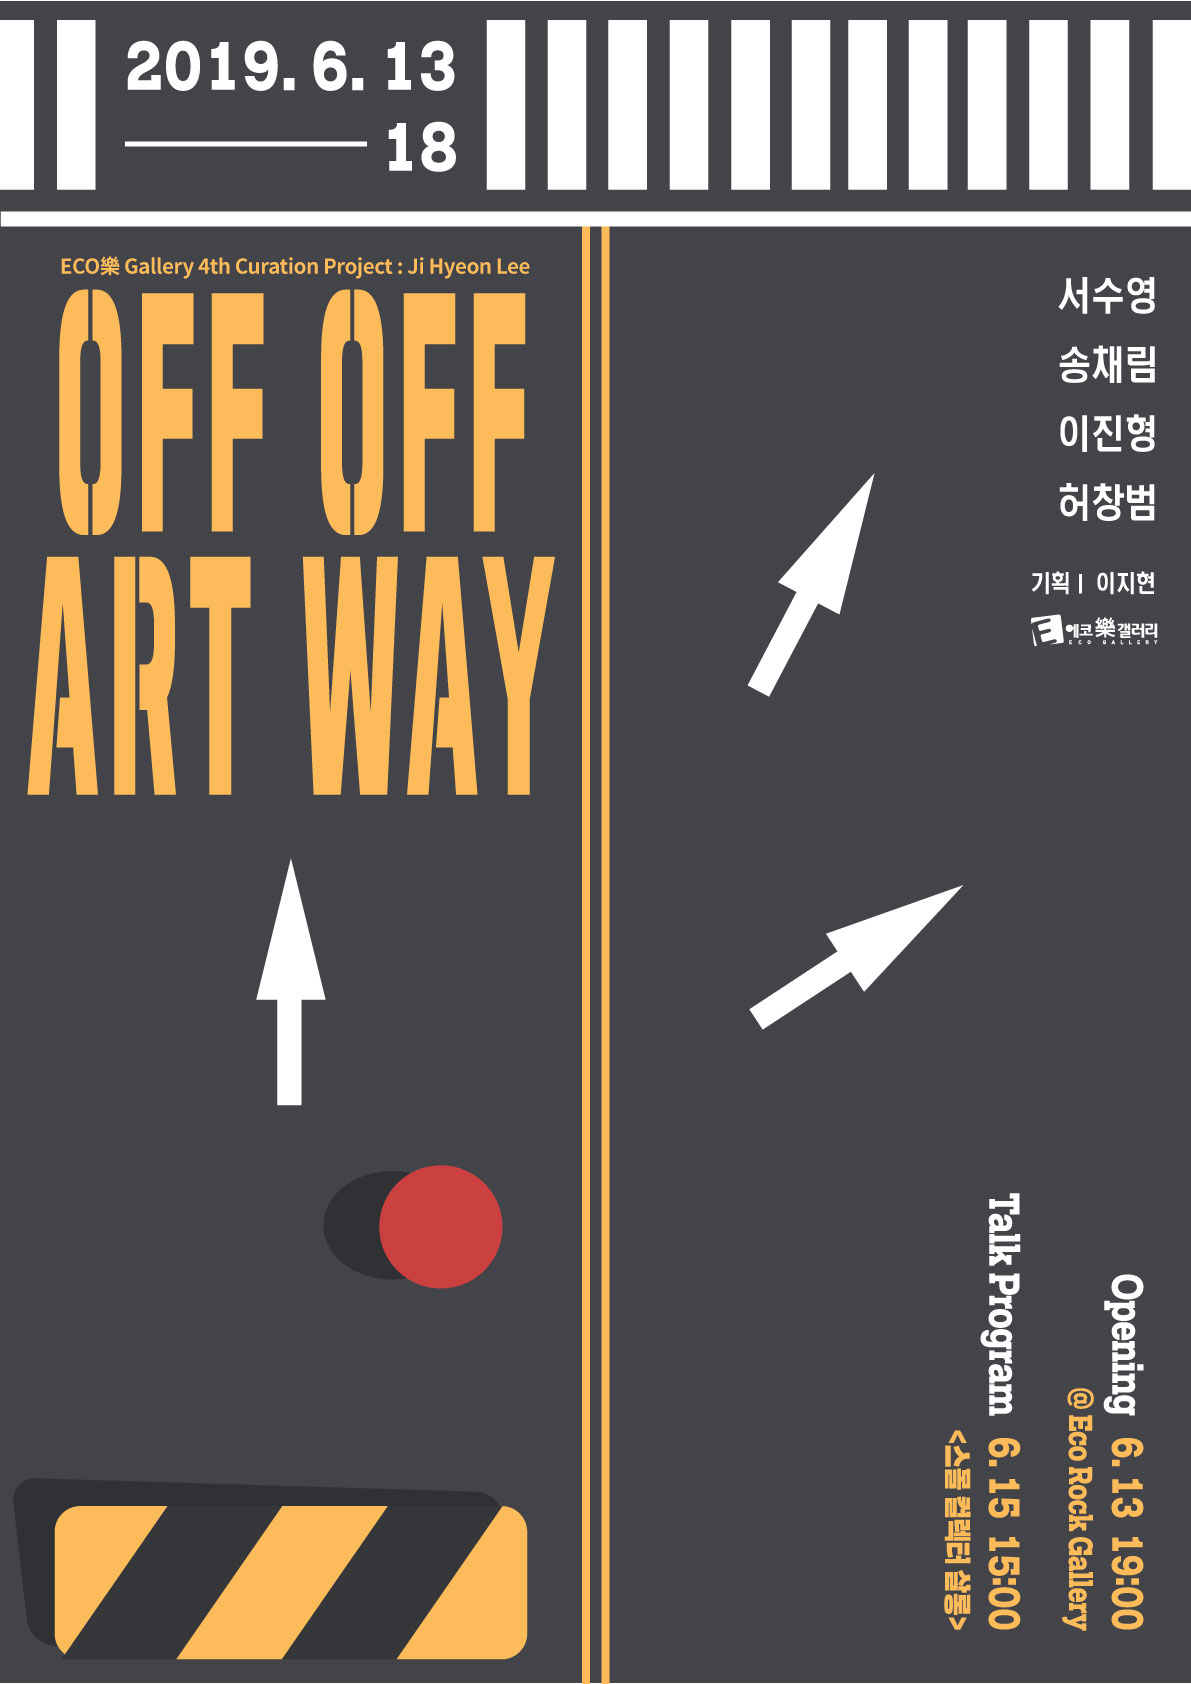 [ECO樂Gallery 4회 독립큐레이션 프로젝트] 오프오프아트웨이(OFF OFF ART WAY)_이지현 독립큐레이터